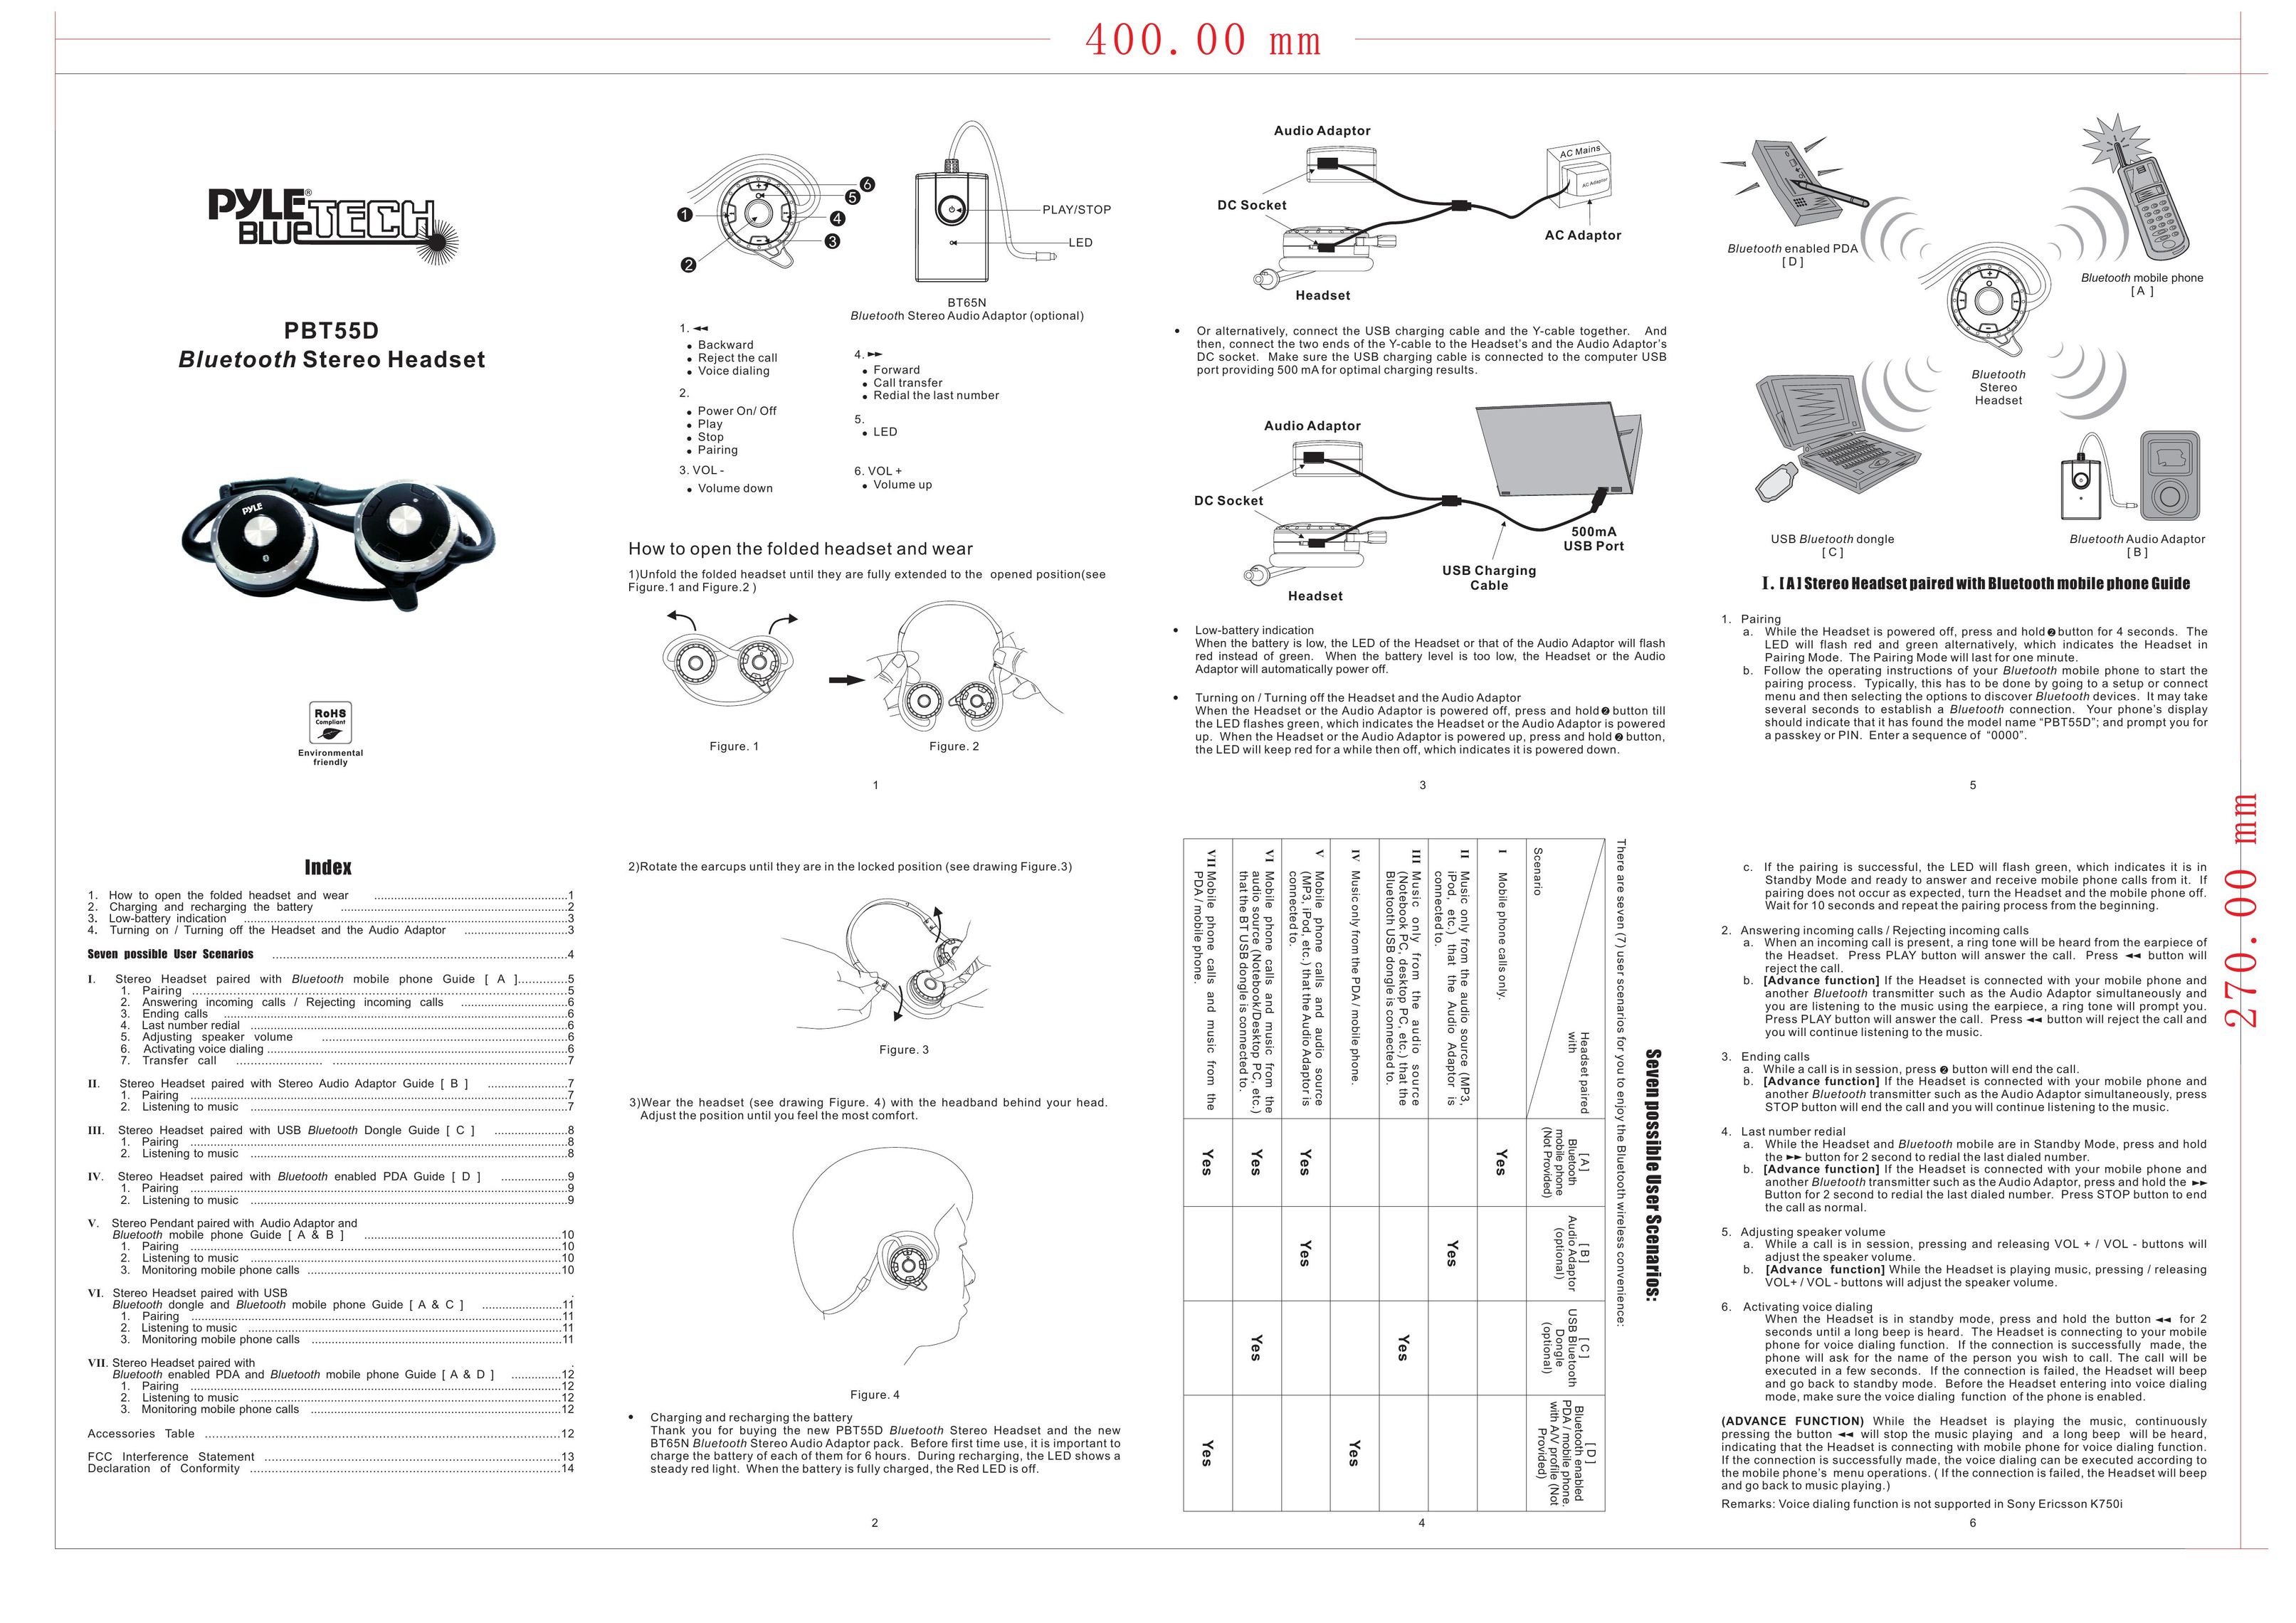 Radio Shack PBT55D Bluetooth Headset User Manual